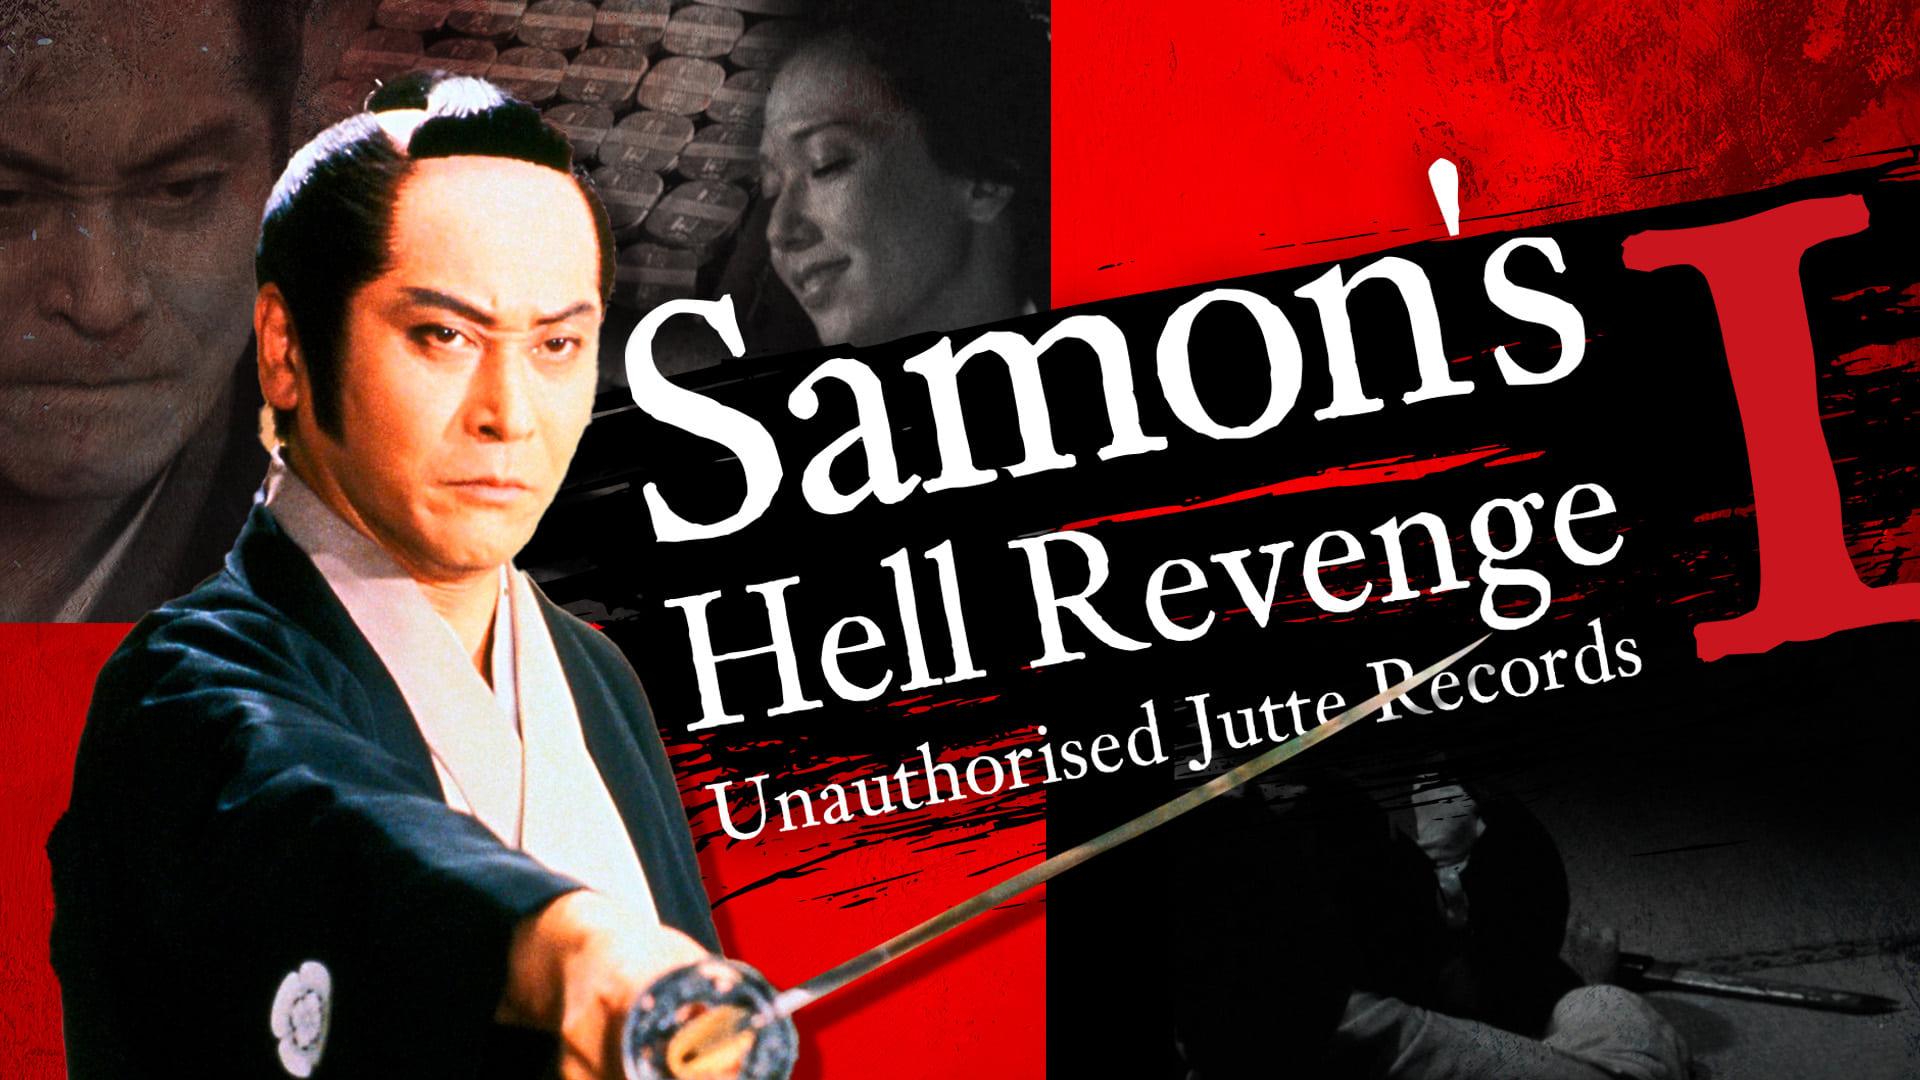 Samon’s Hell Revenge: Unauthorised Jutte Records backdrop